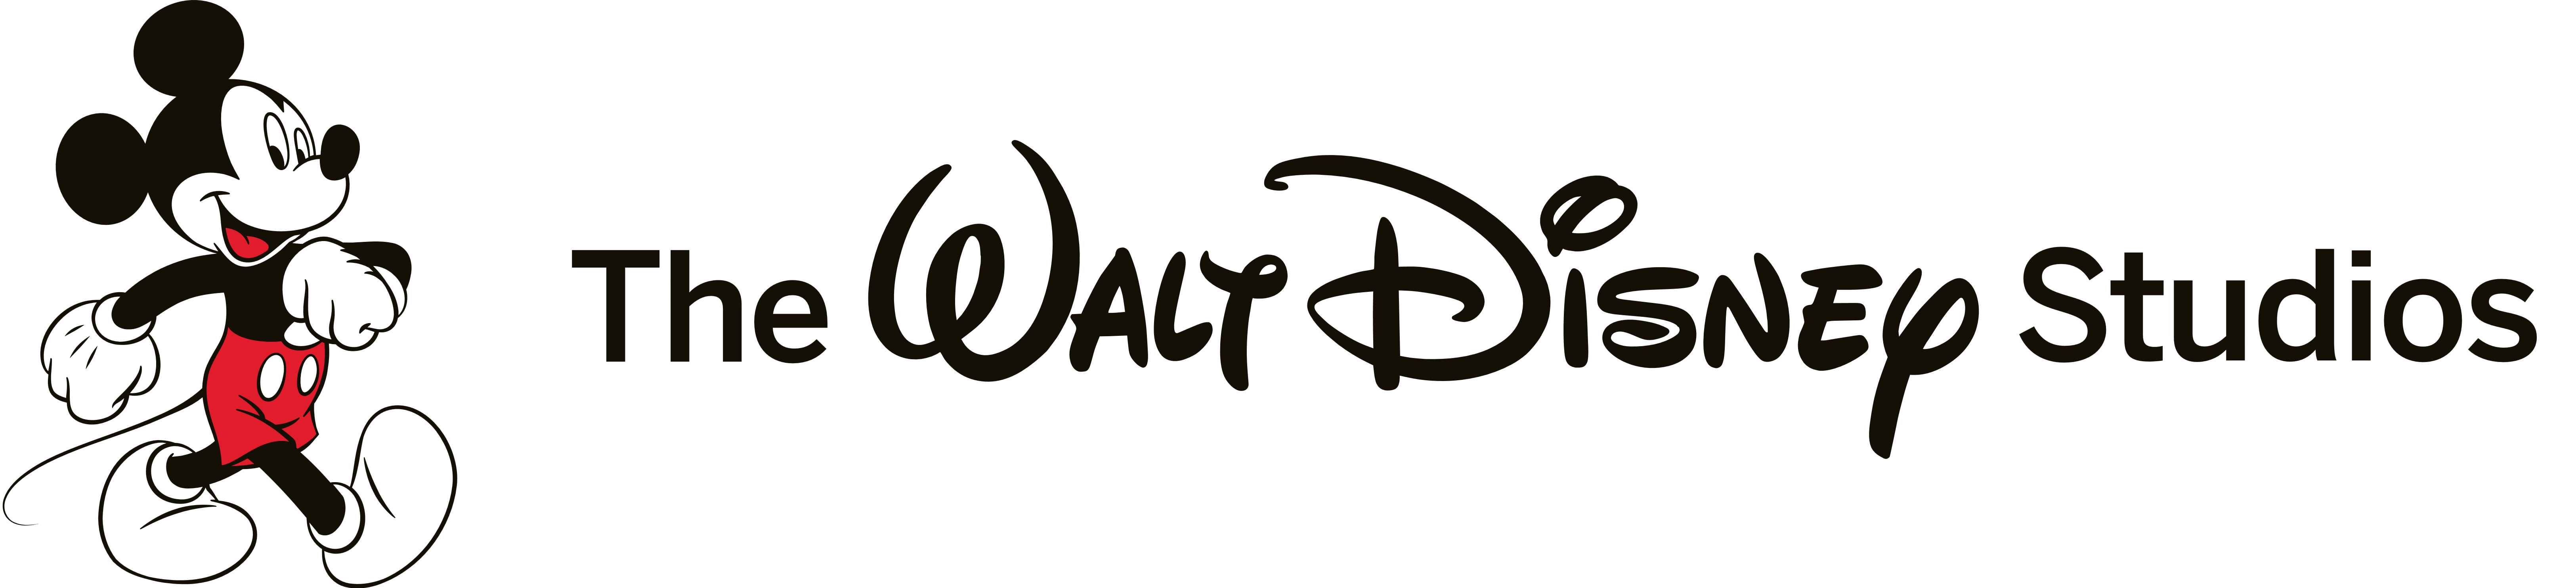 the walt disney studios film png logo #4466